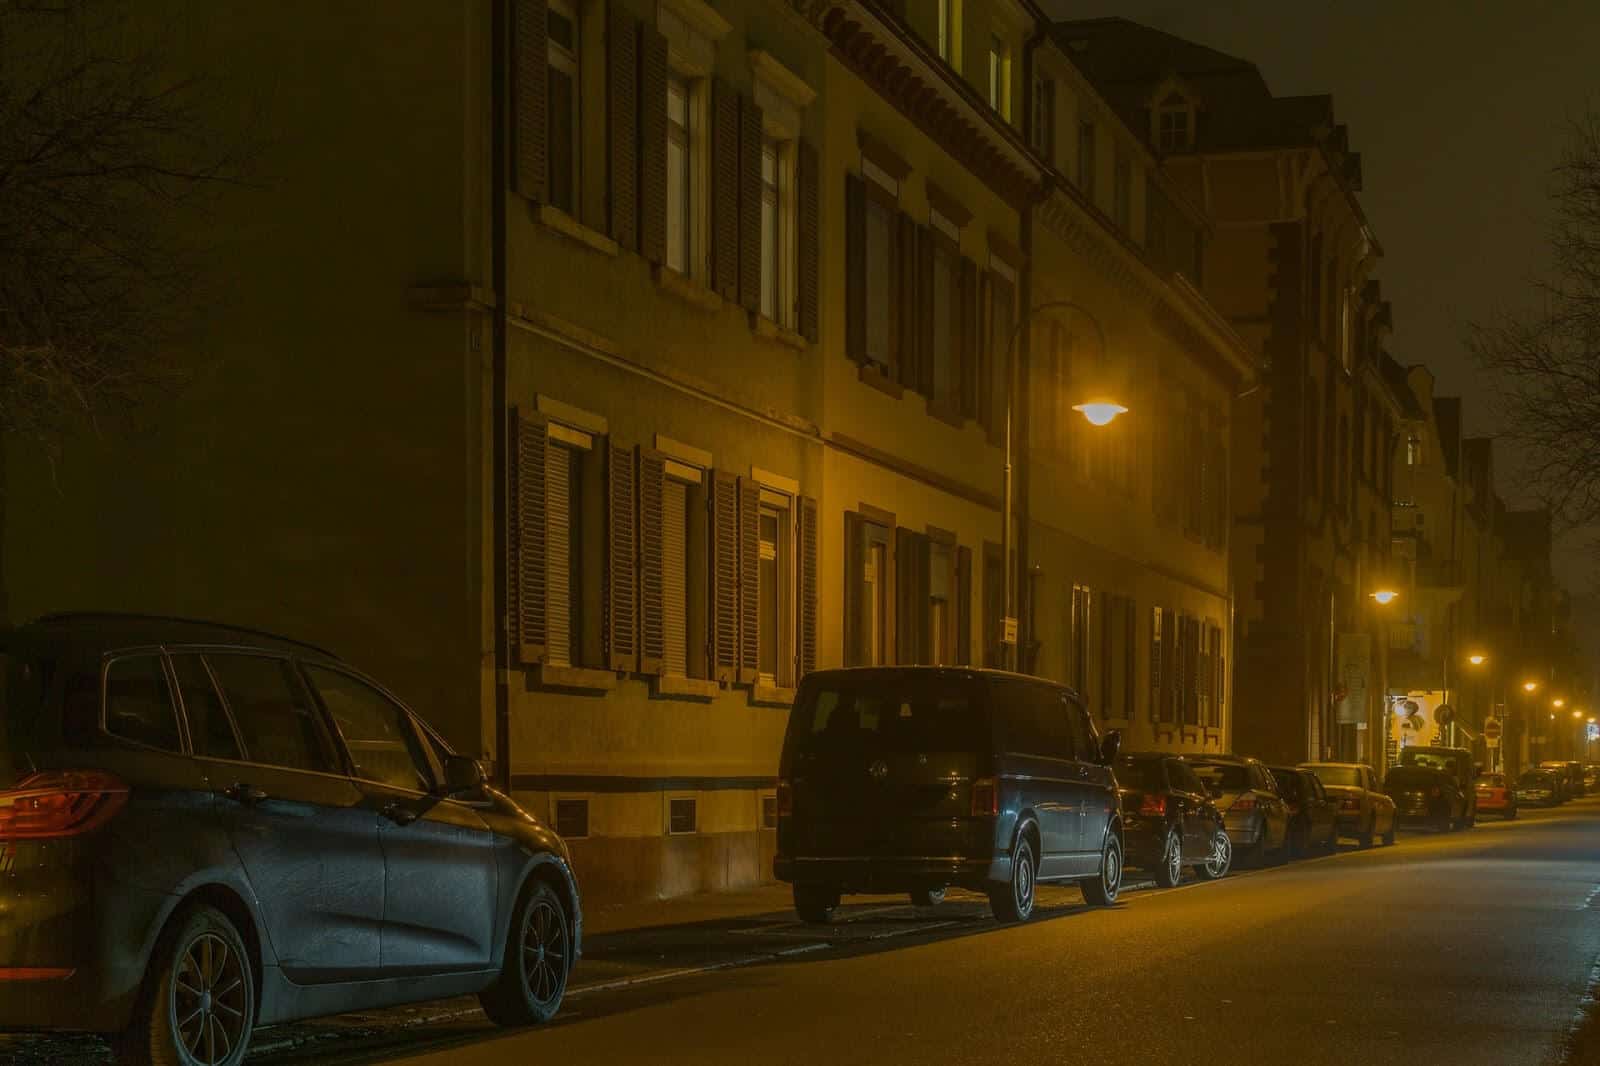 Cars parked on a dark street